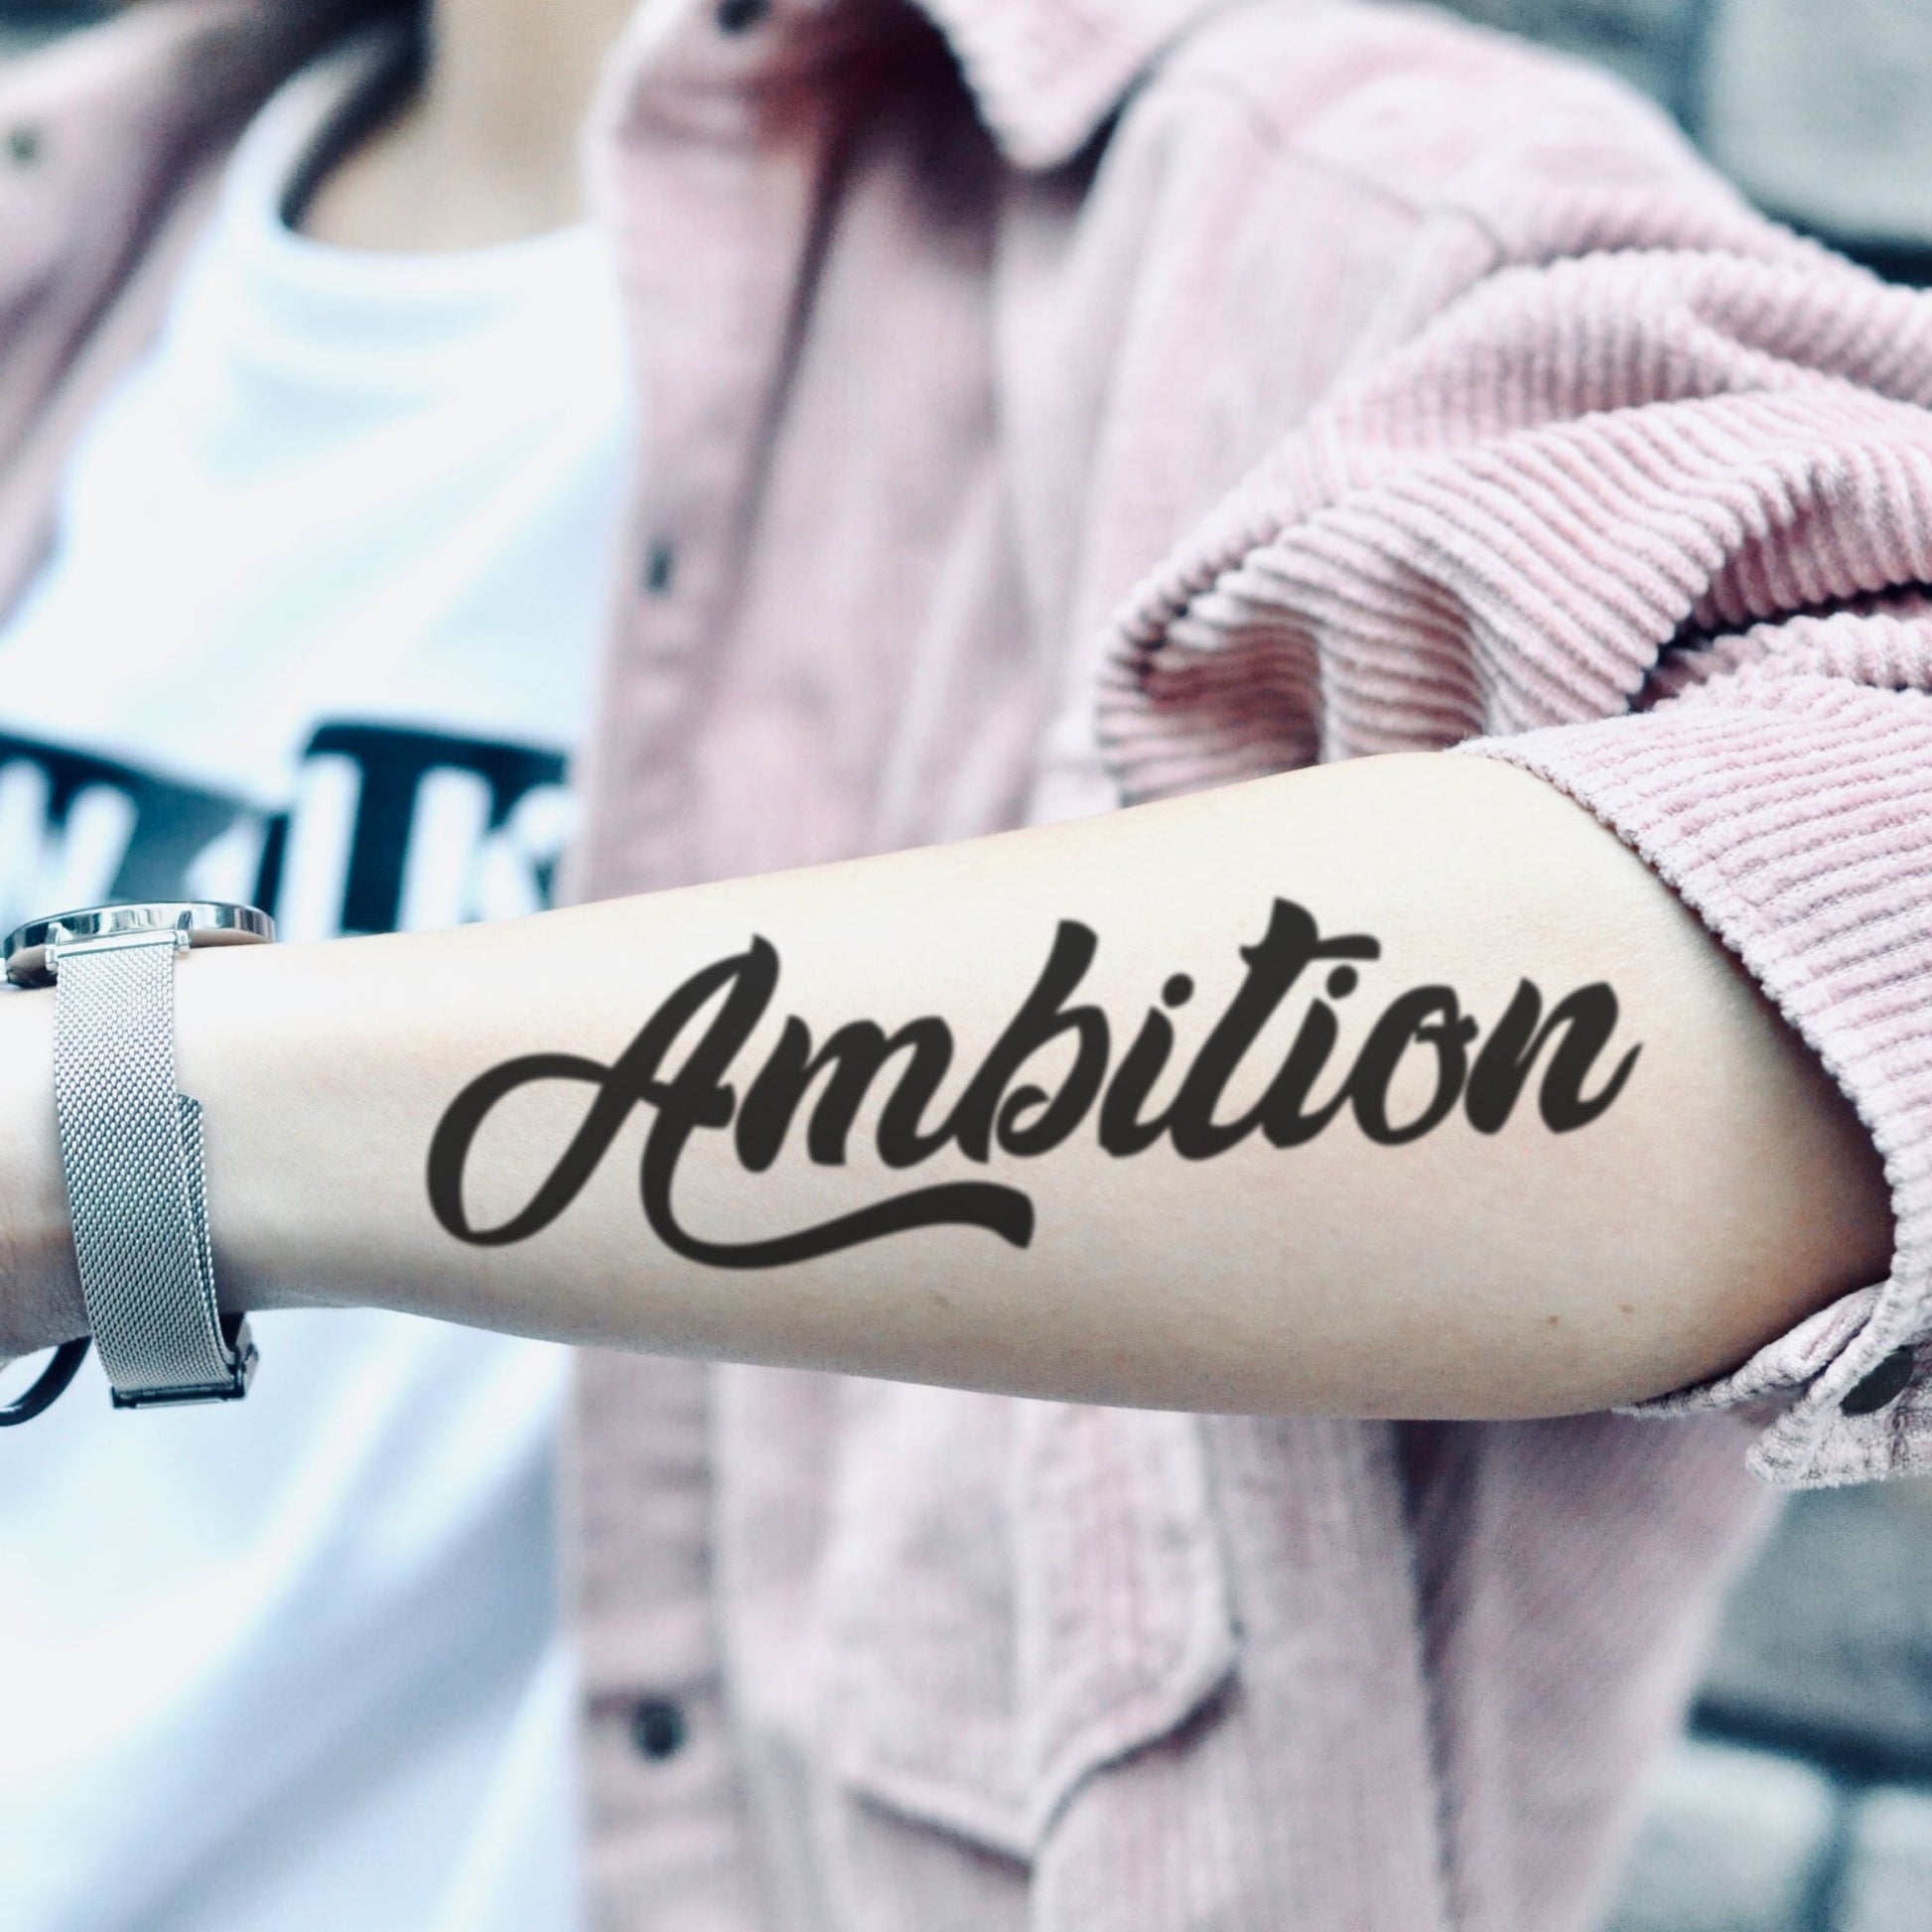 fake medium ambition ambitious cursive script lettering temporary tattoo sticker design idea on forearm